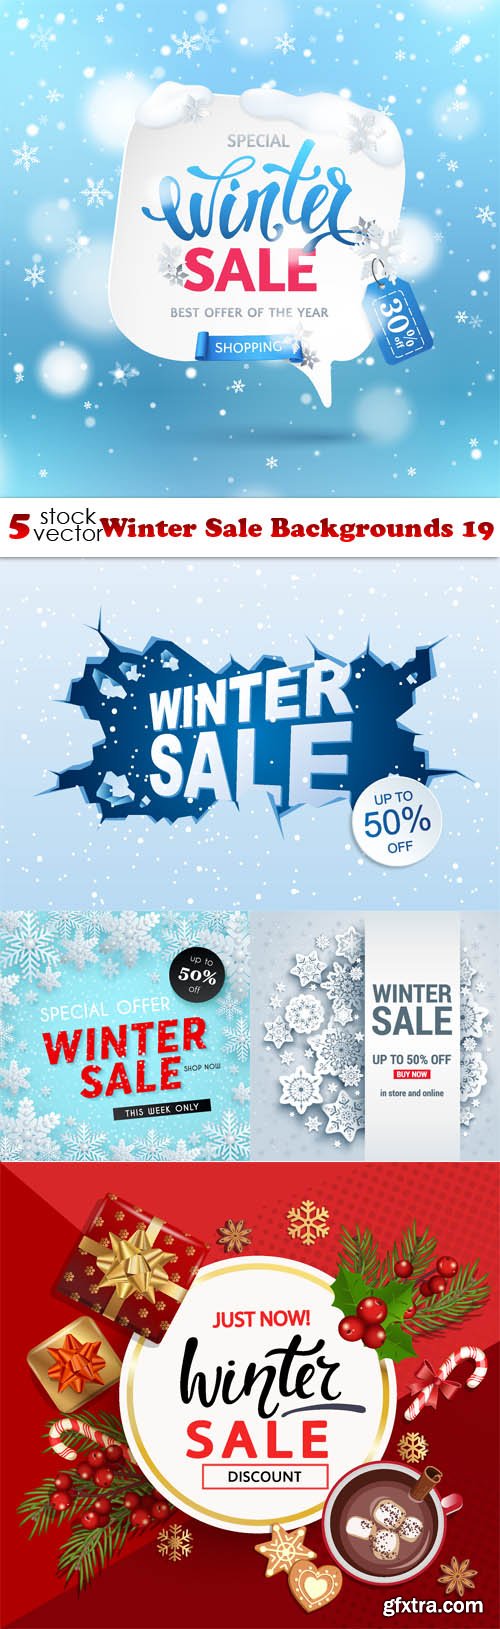 Vectors - Winter Sale Backgrounds 19